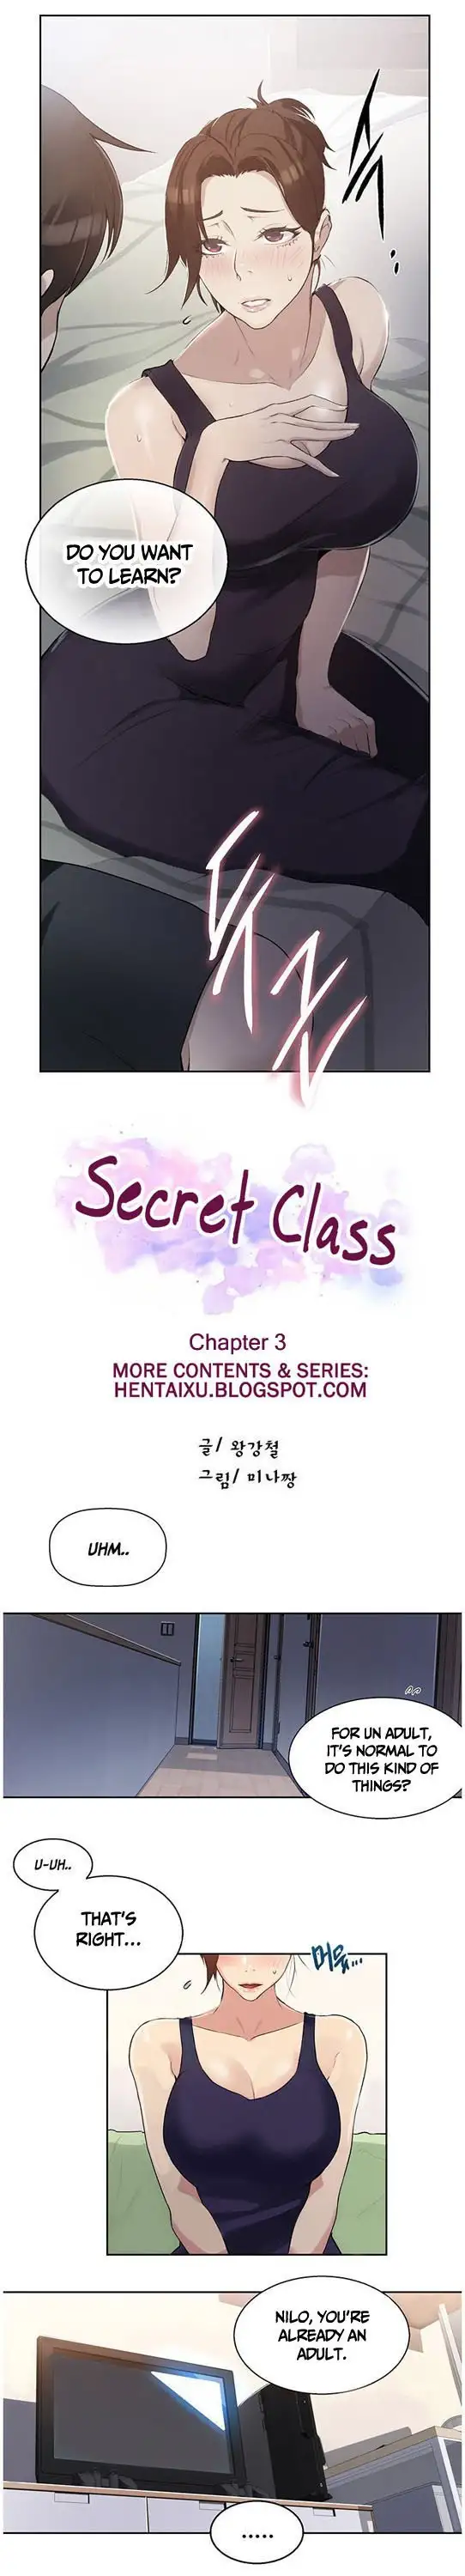 Secret Class - Chapter 3 Page 1